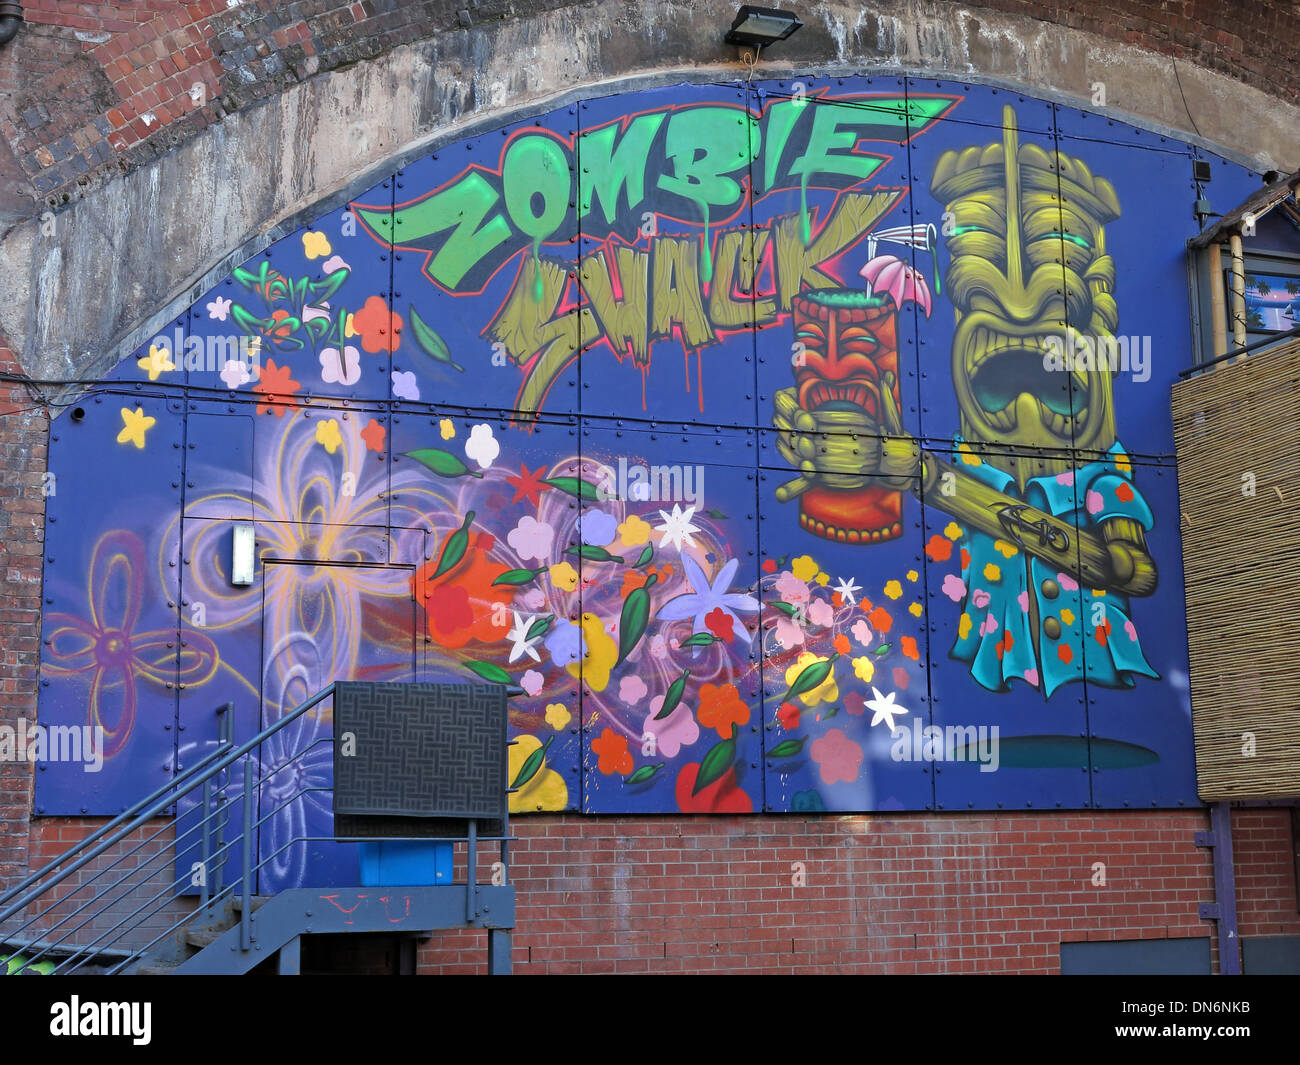 Zombie Shack Graffiti, arcade derrière le pub Thirsty Scholar, Oxford Road Manchester, Angleterre, Royaume-Uni, M1 5NP Banque D'Images